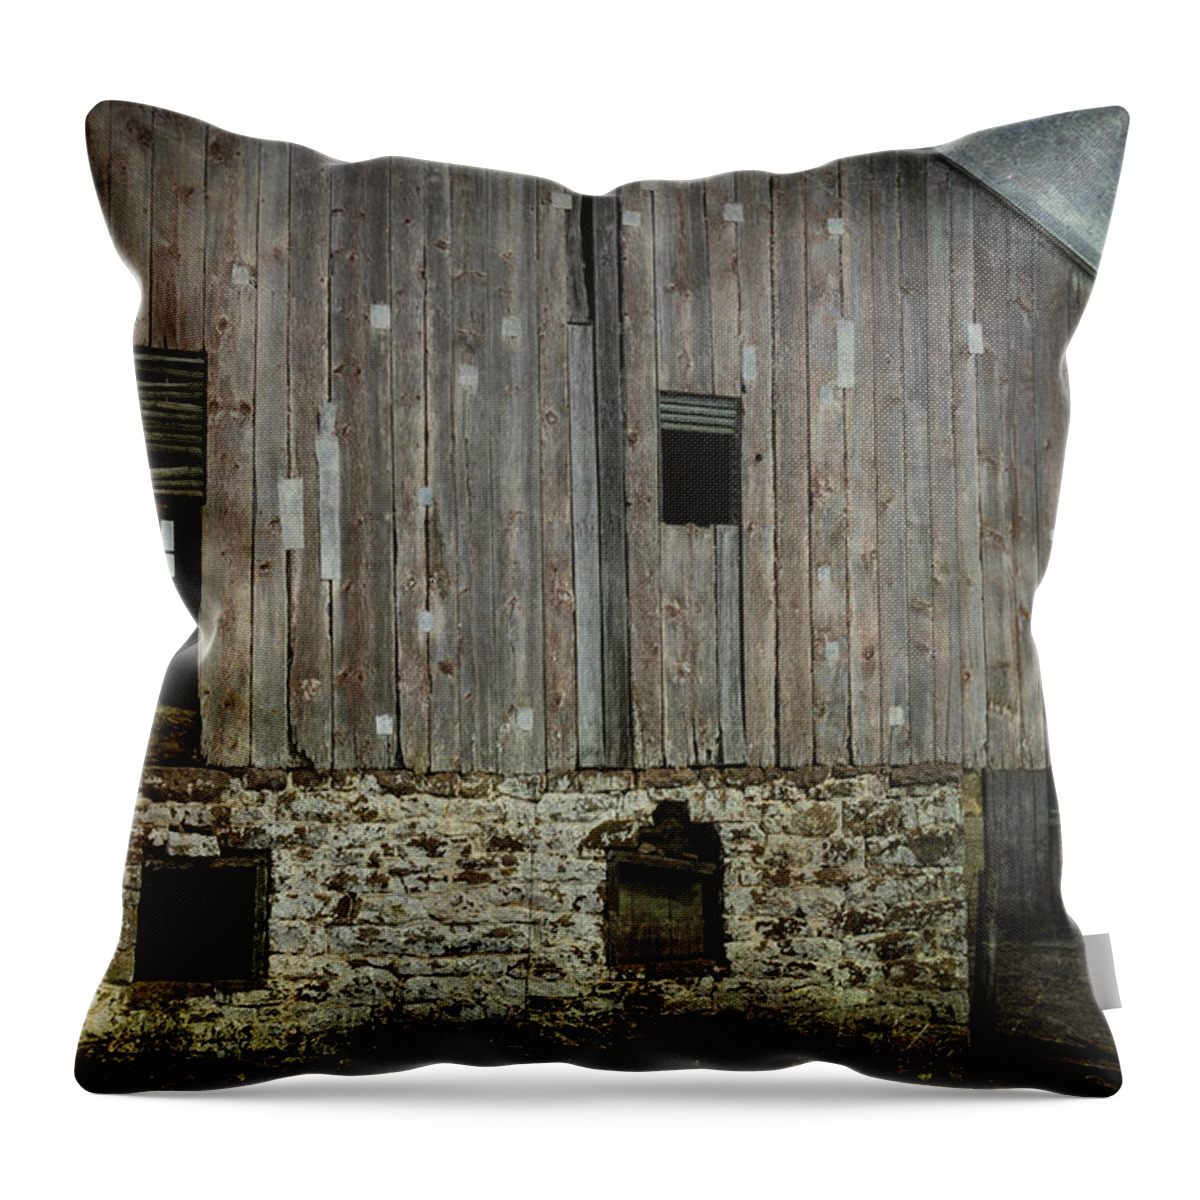 Building Throw Pillow featuring the photograph Four Broken Windows by Joan Carroll